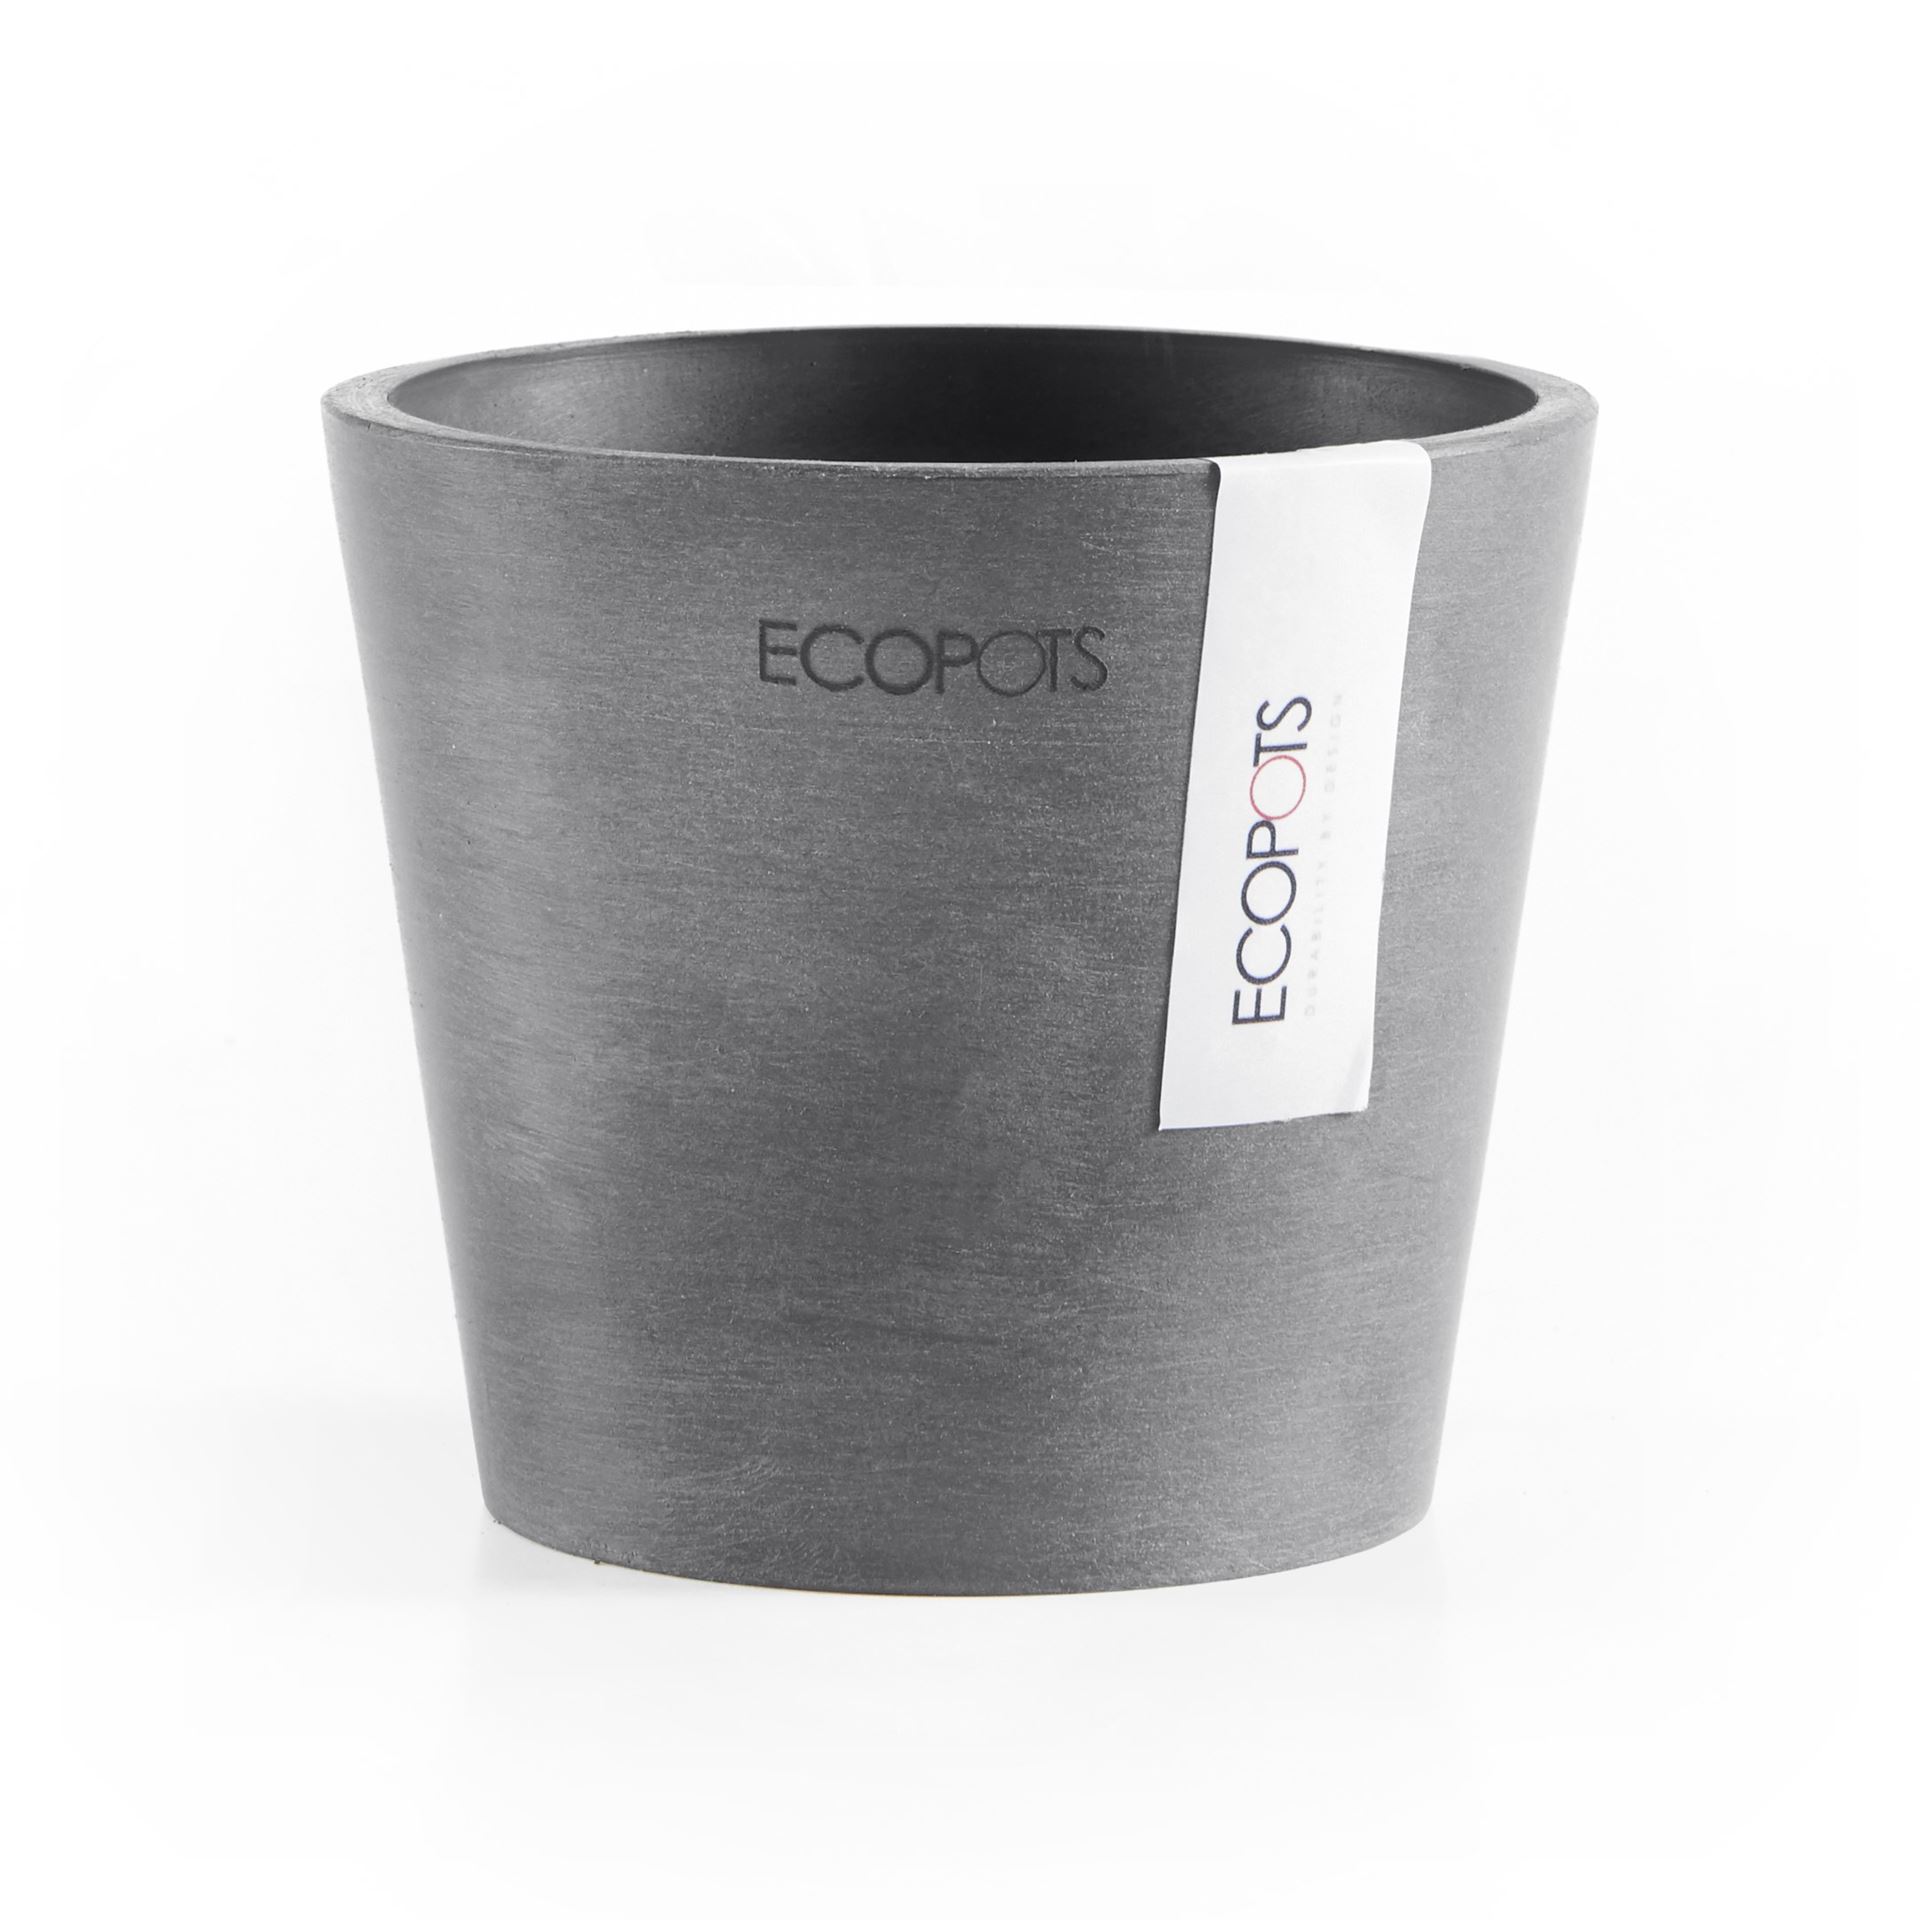 Ecopots-amsterdam-mini-grey-10-5-cm-H9-2-cm